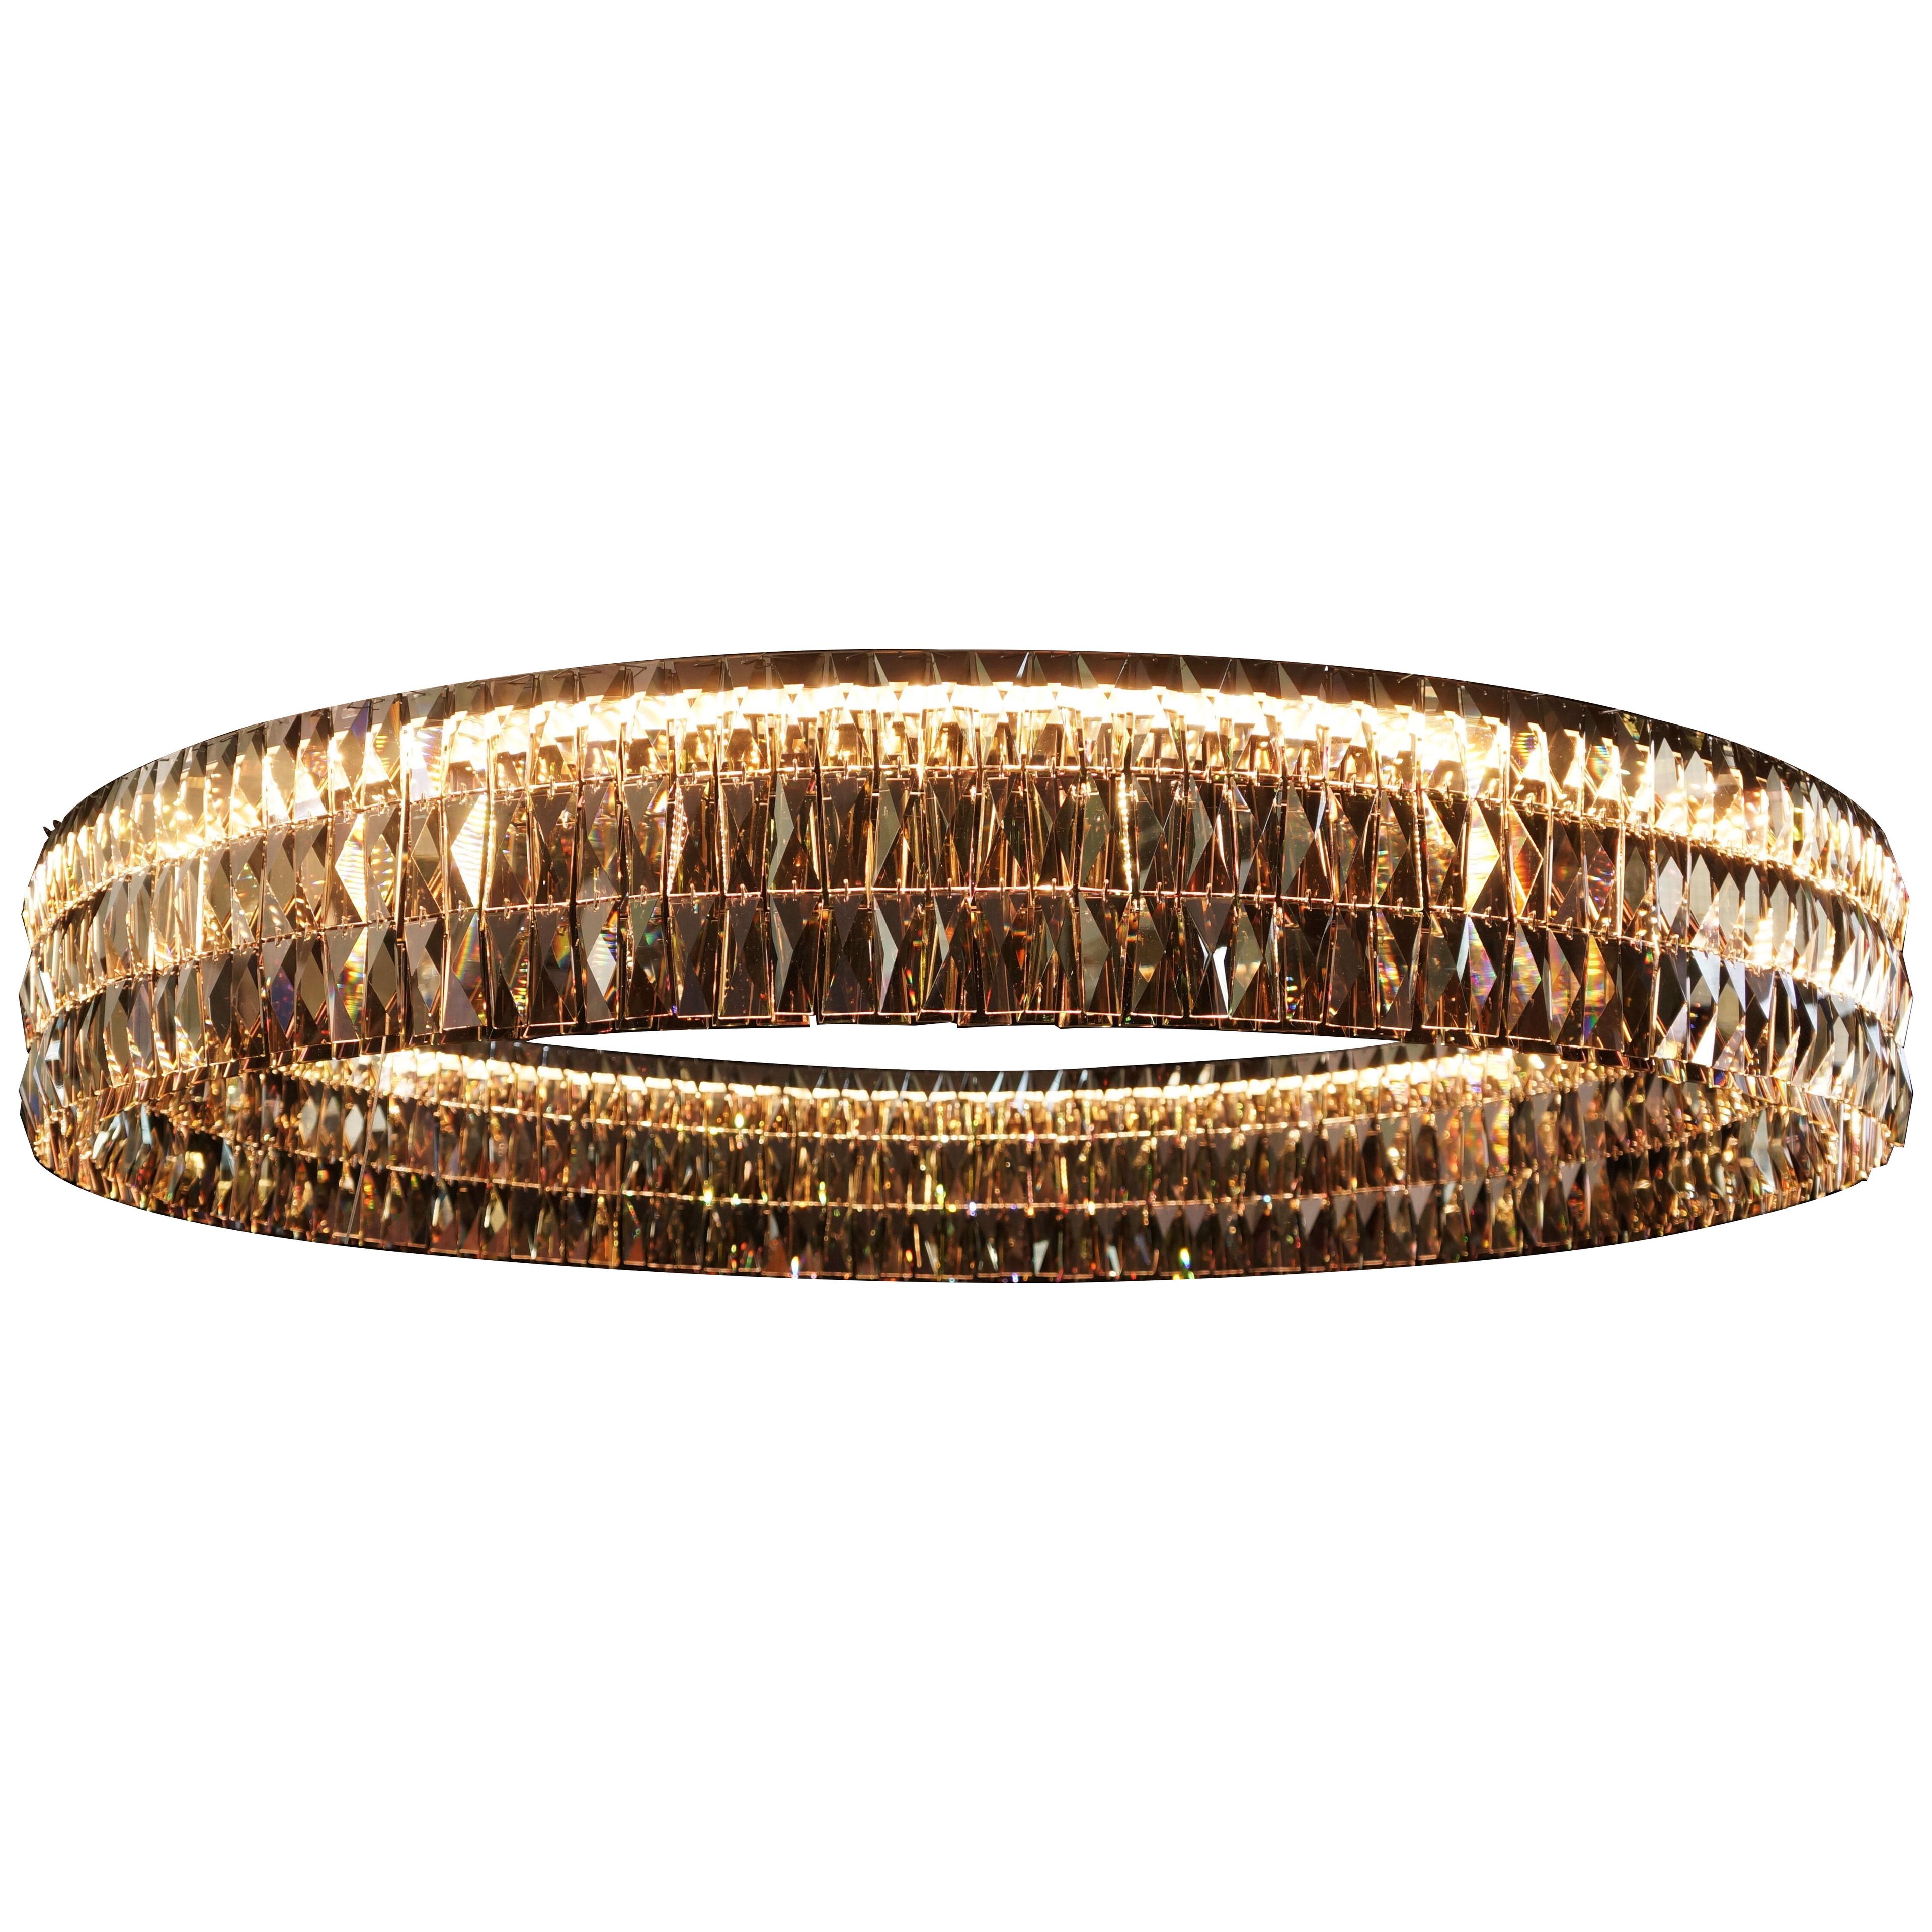 GLITTERHOOP - GOLDEN ANTIQUE - minimlaist crystal chandelier